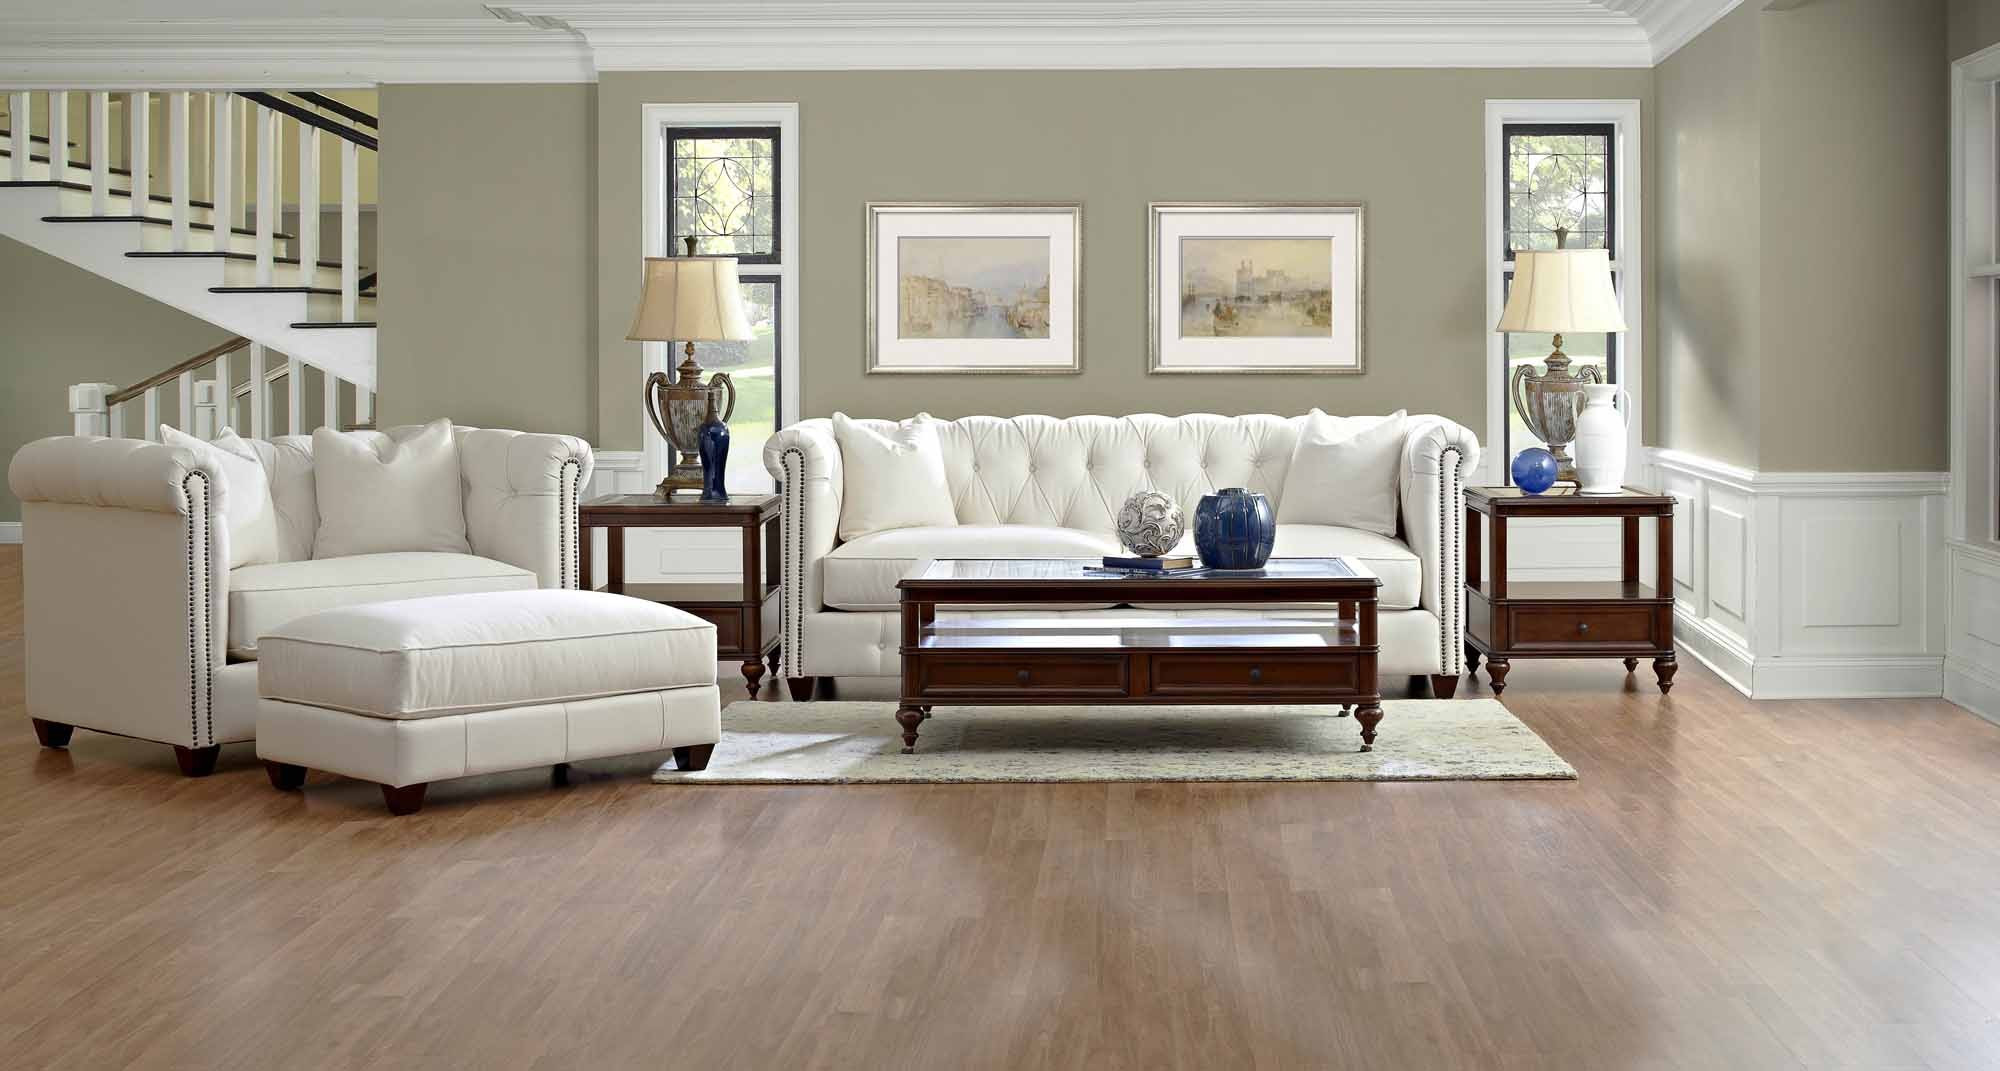 Wayfair Chairs Living Room
 Living Room Sets Wayfair – Modern House